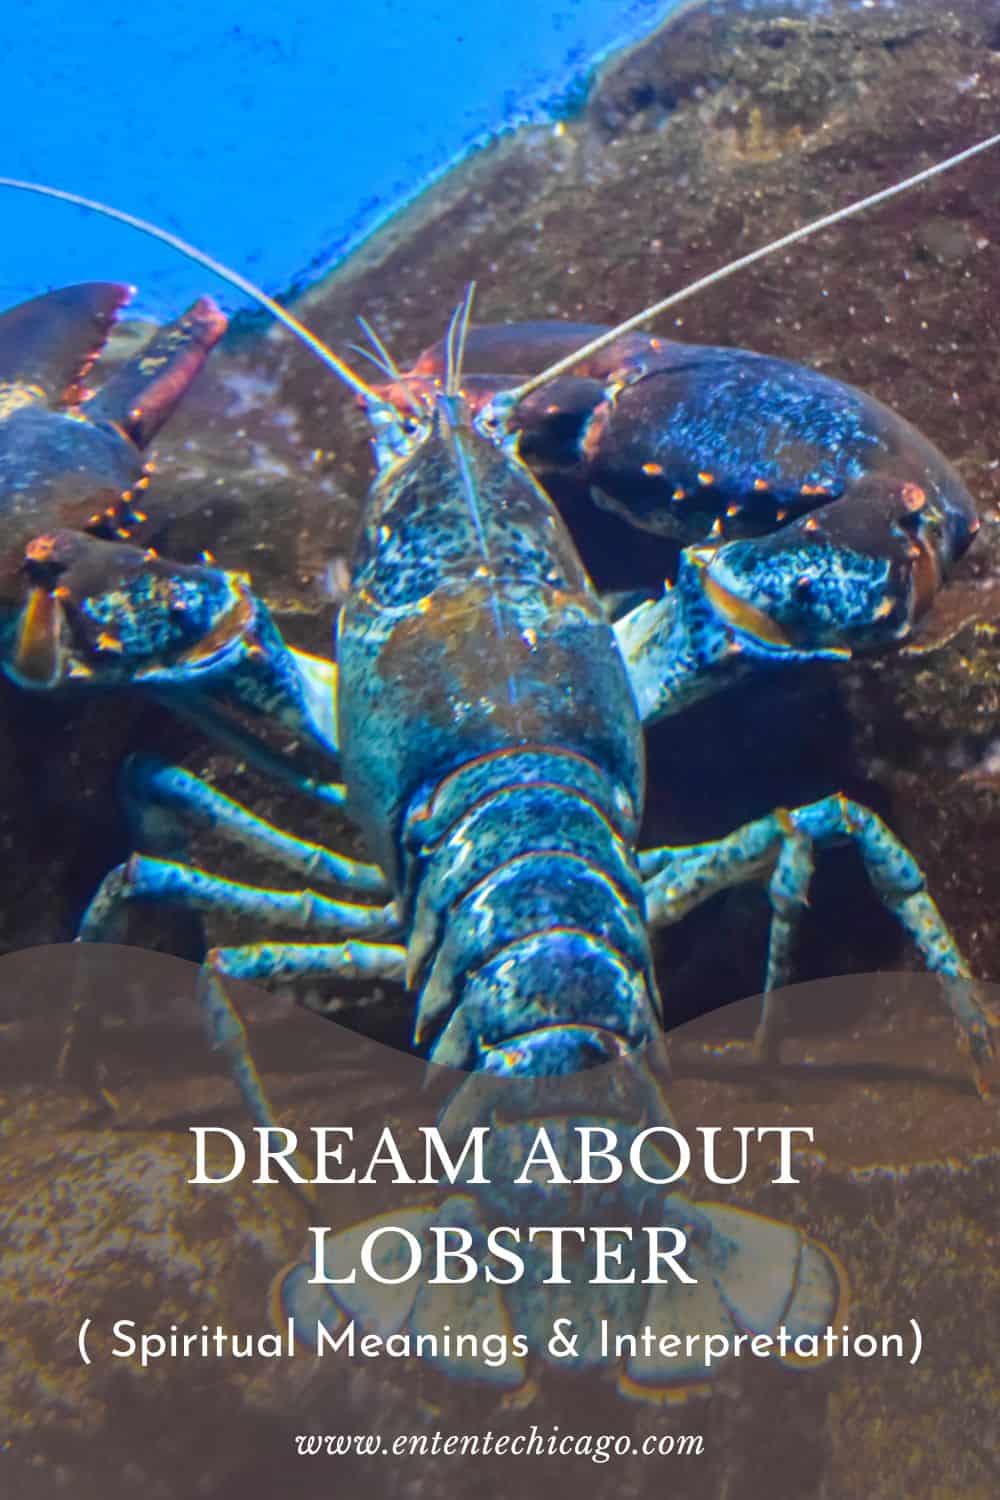 Dream About Lobster ( Spiritual Meanings & Interpretation)